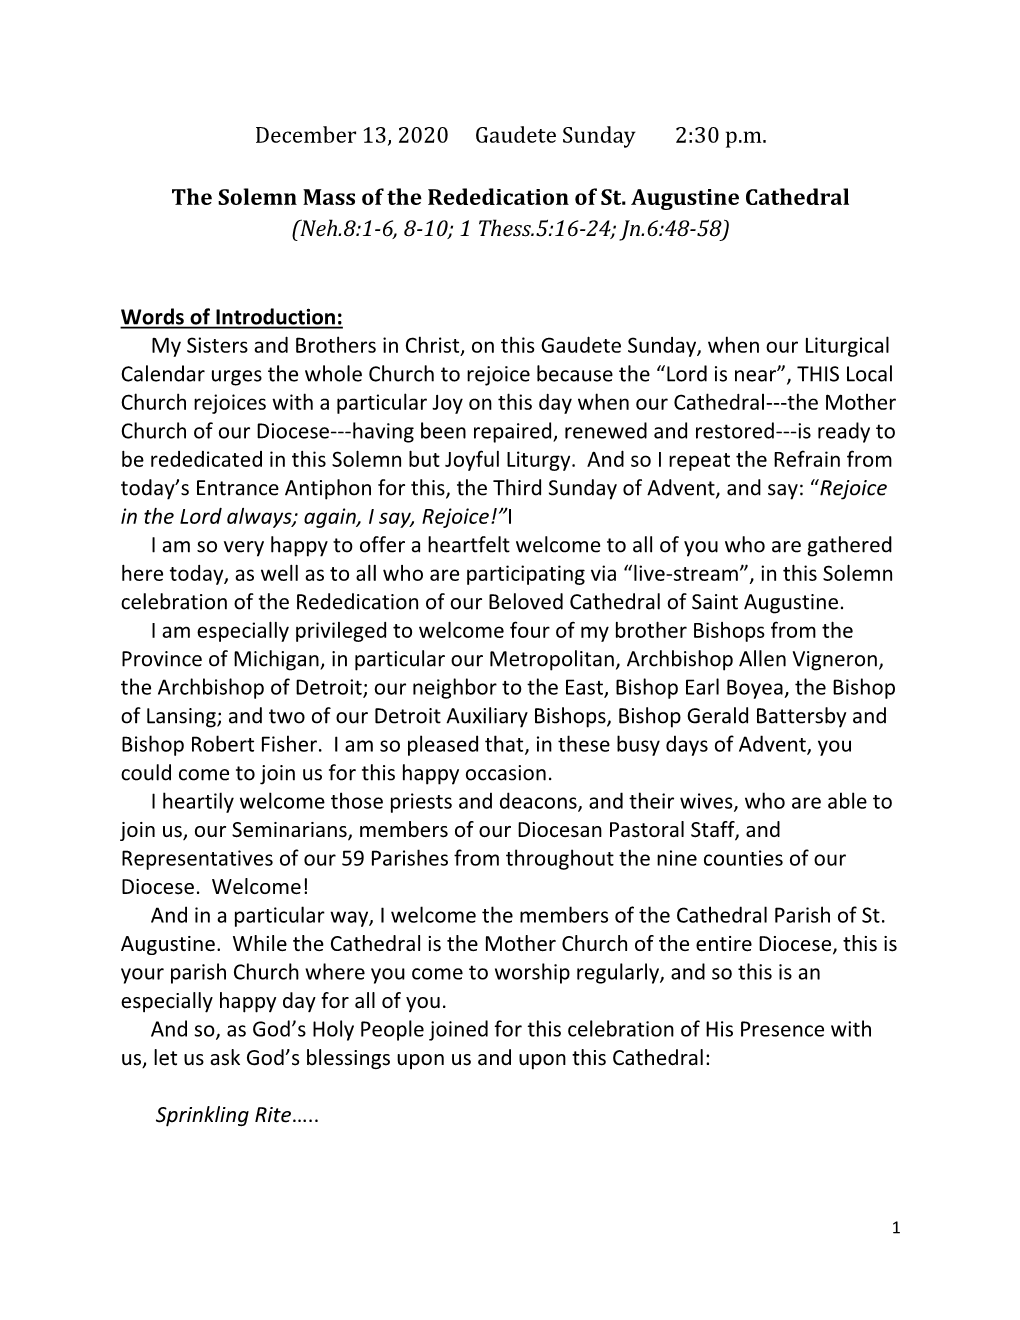 December 13, 2020 Gaudete Sunday 2:30 P.M. the Solemn Mass of The